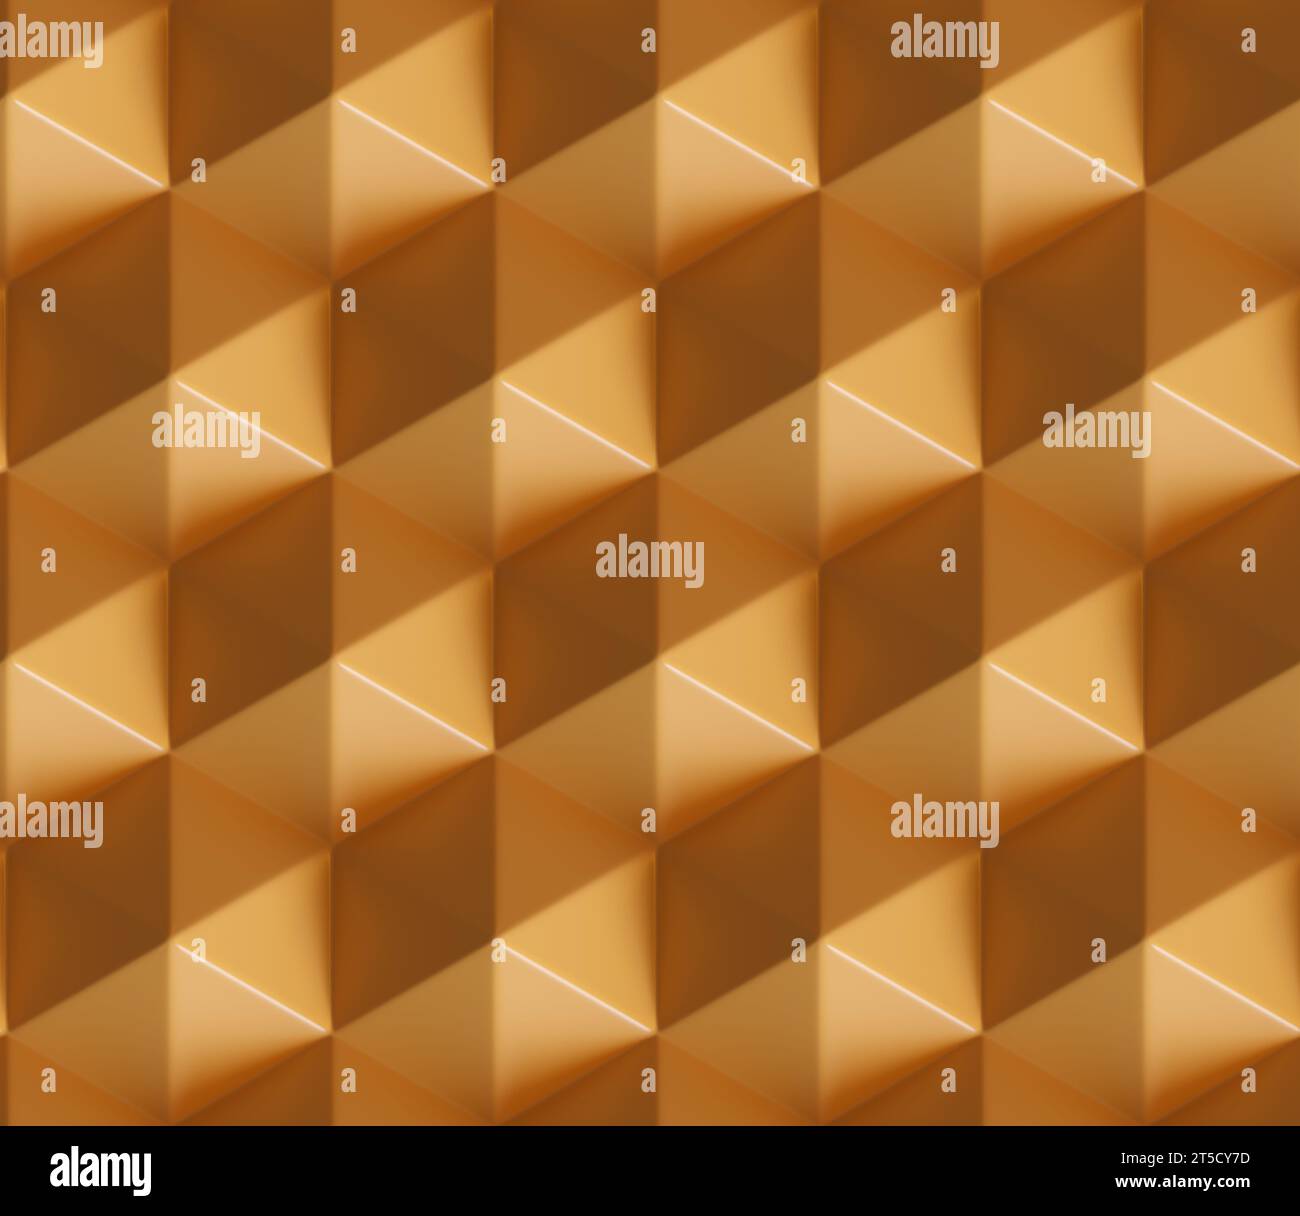 Hexagonal pyramids background. Seamless pattern. 3d illustration. Stock Photo